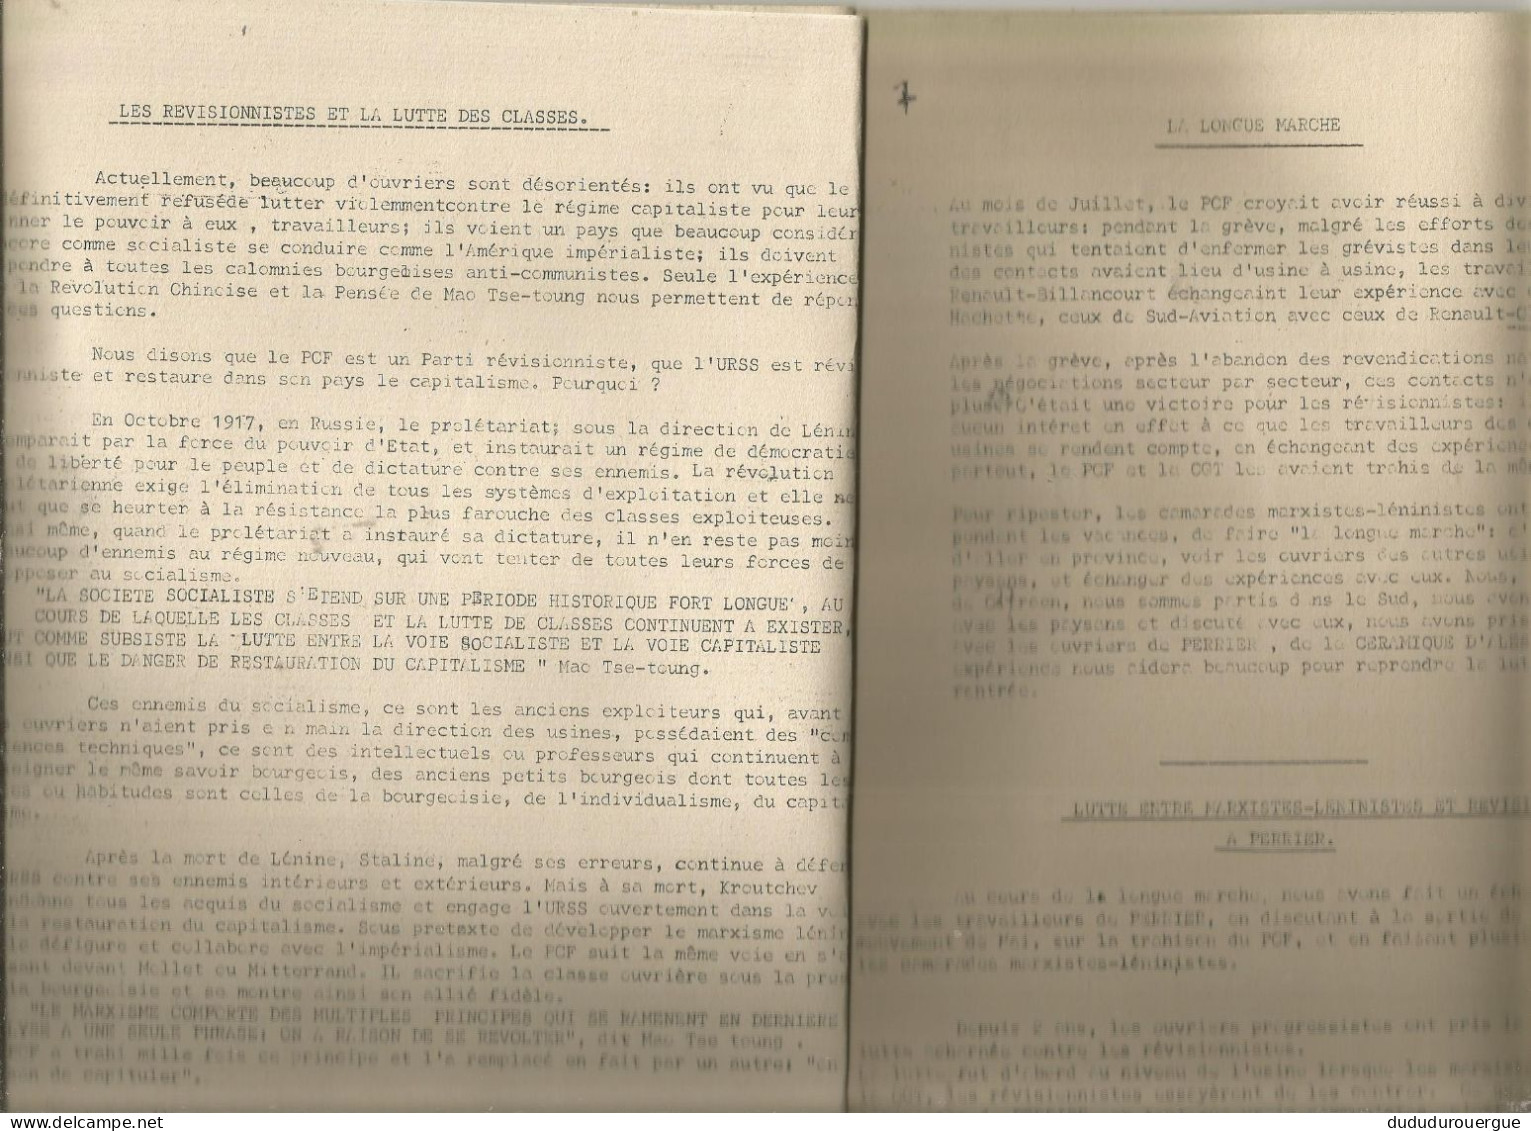 CITROEN ; PROPAGANDE DU GROUPE COMMUNISTE ARME DE LA PENSEE DE MAO - TSE - TOUNG , LE DRAPEAU ROUGE - 1950 - Nu